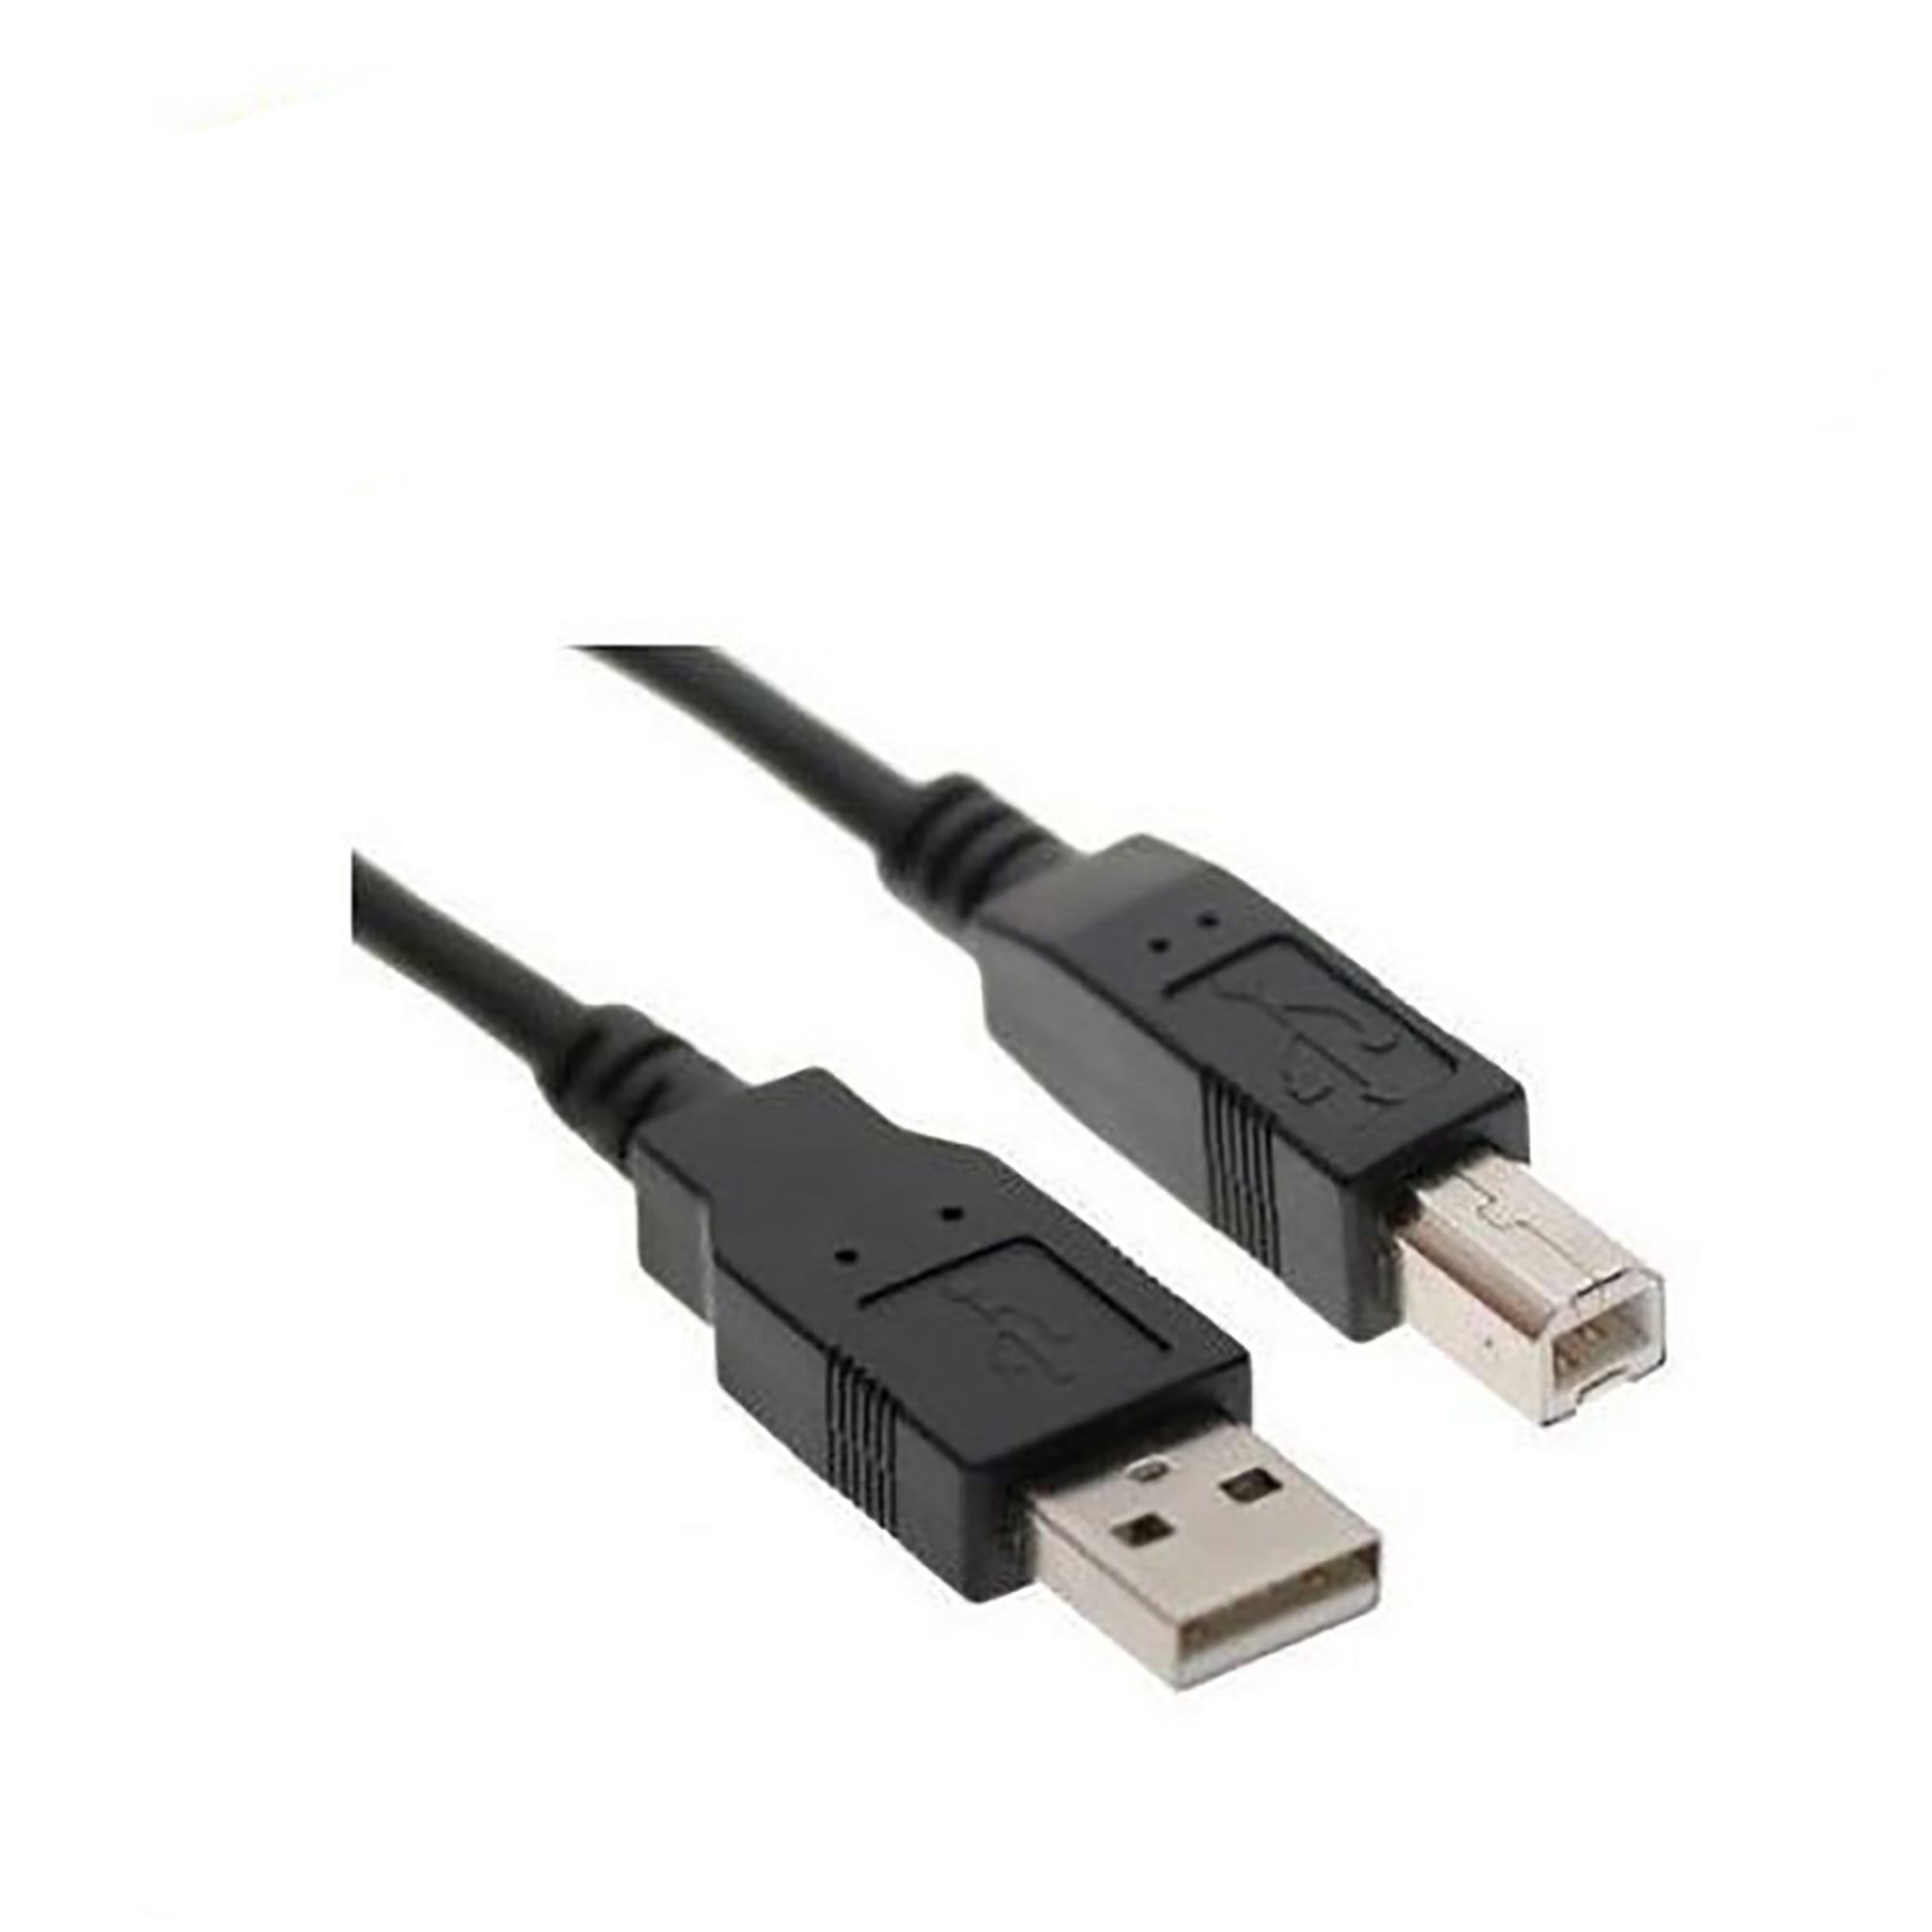 USB Cable Cord For Toshiba HDDR400E03X HDDR250E03X HDDR320E03X HDDR250E02X Hard 